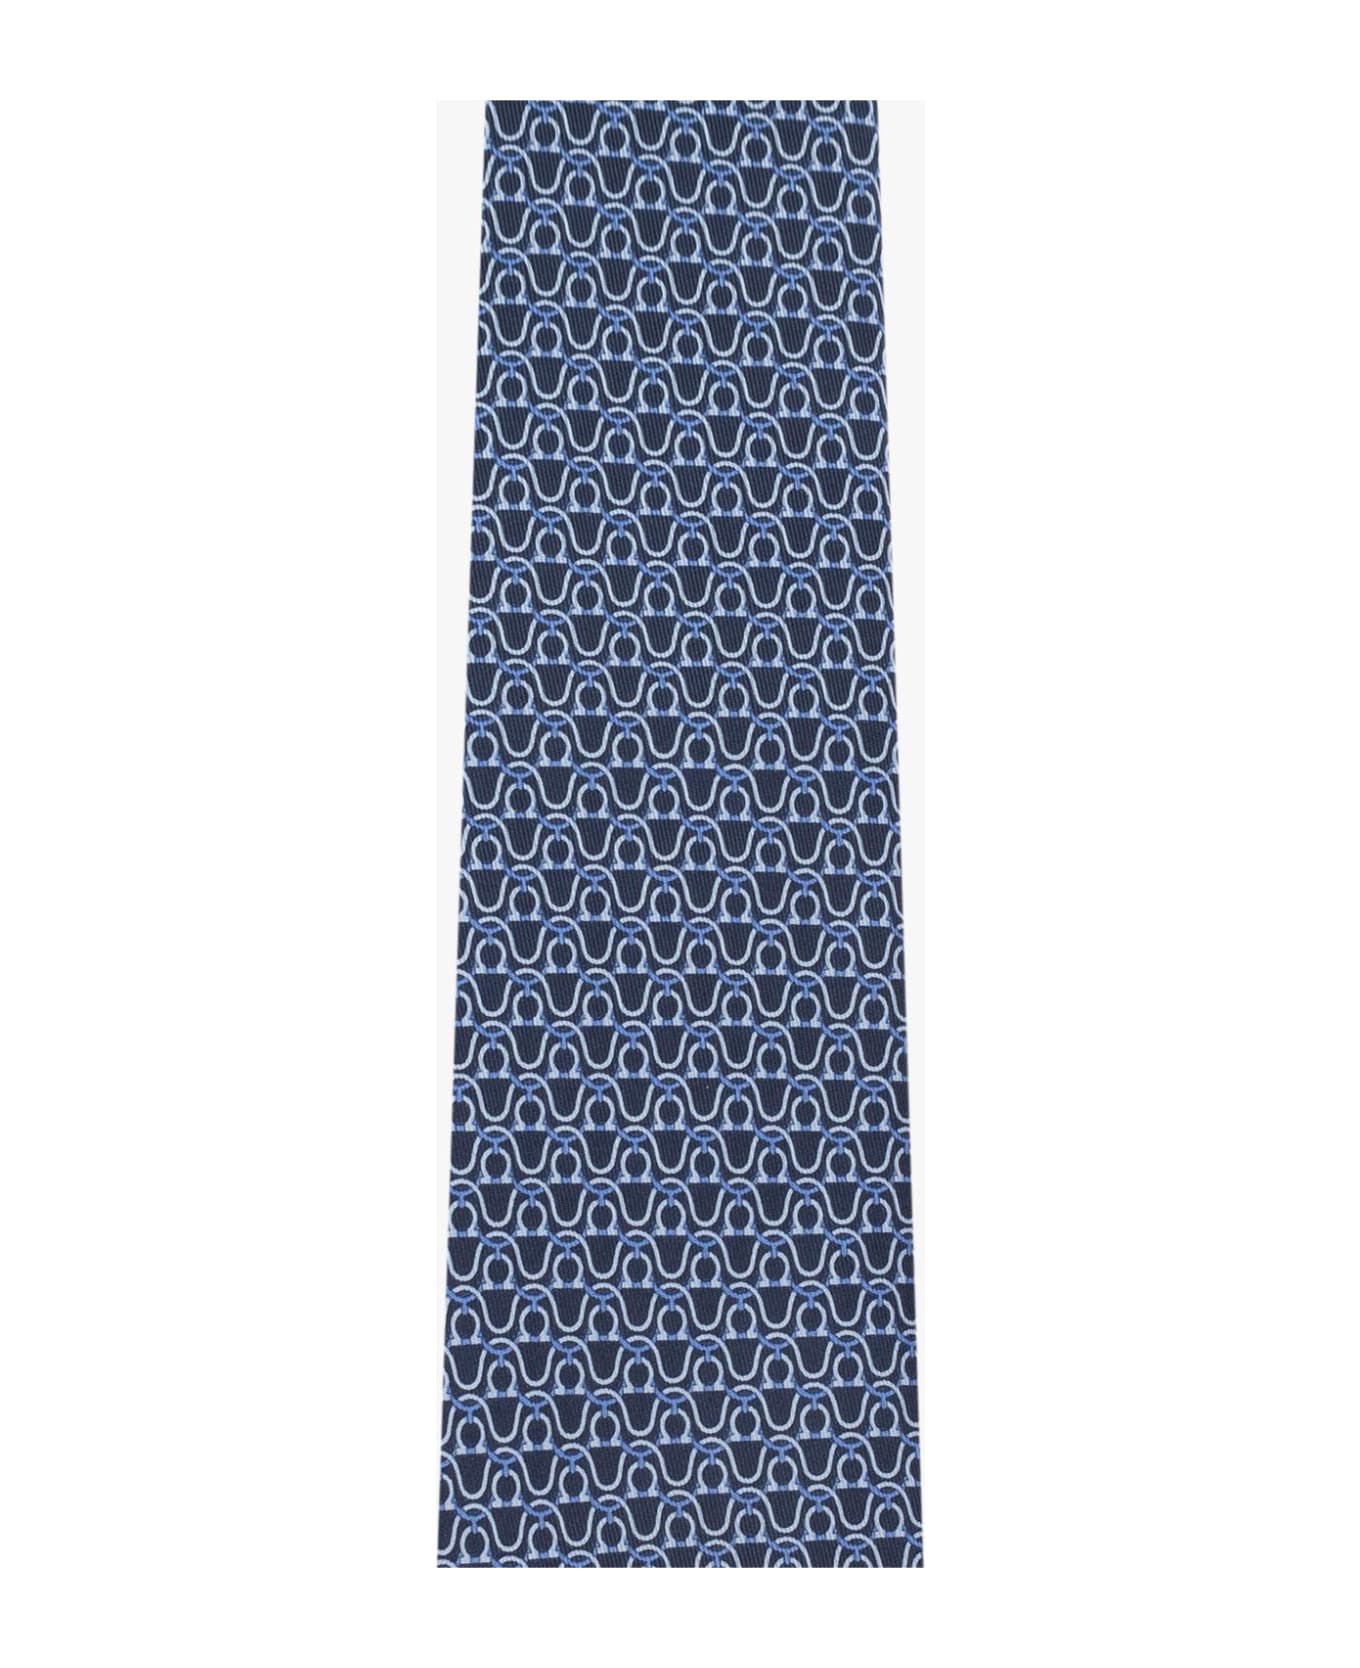 Ferragamo Silk Tie - Blue